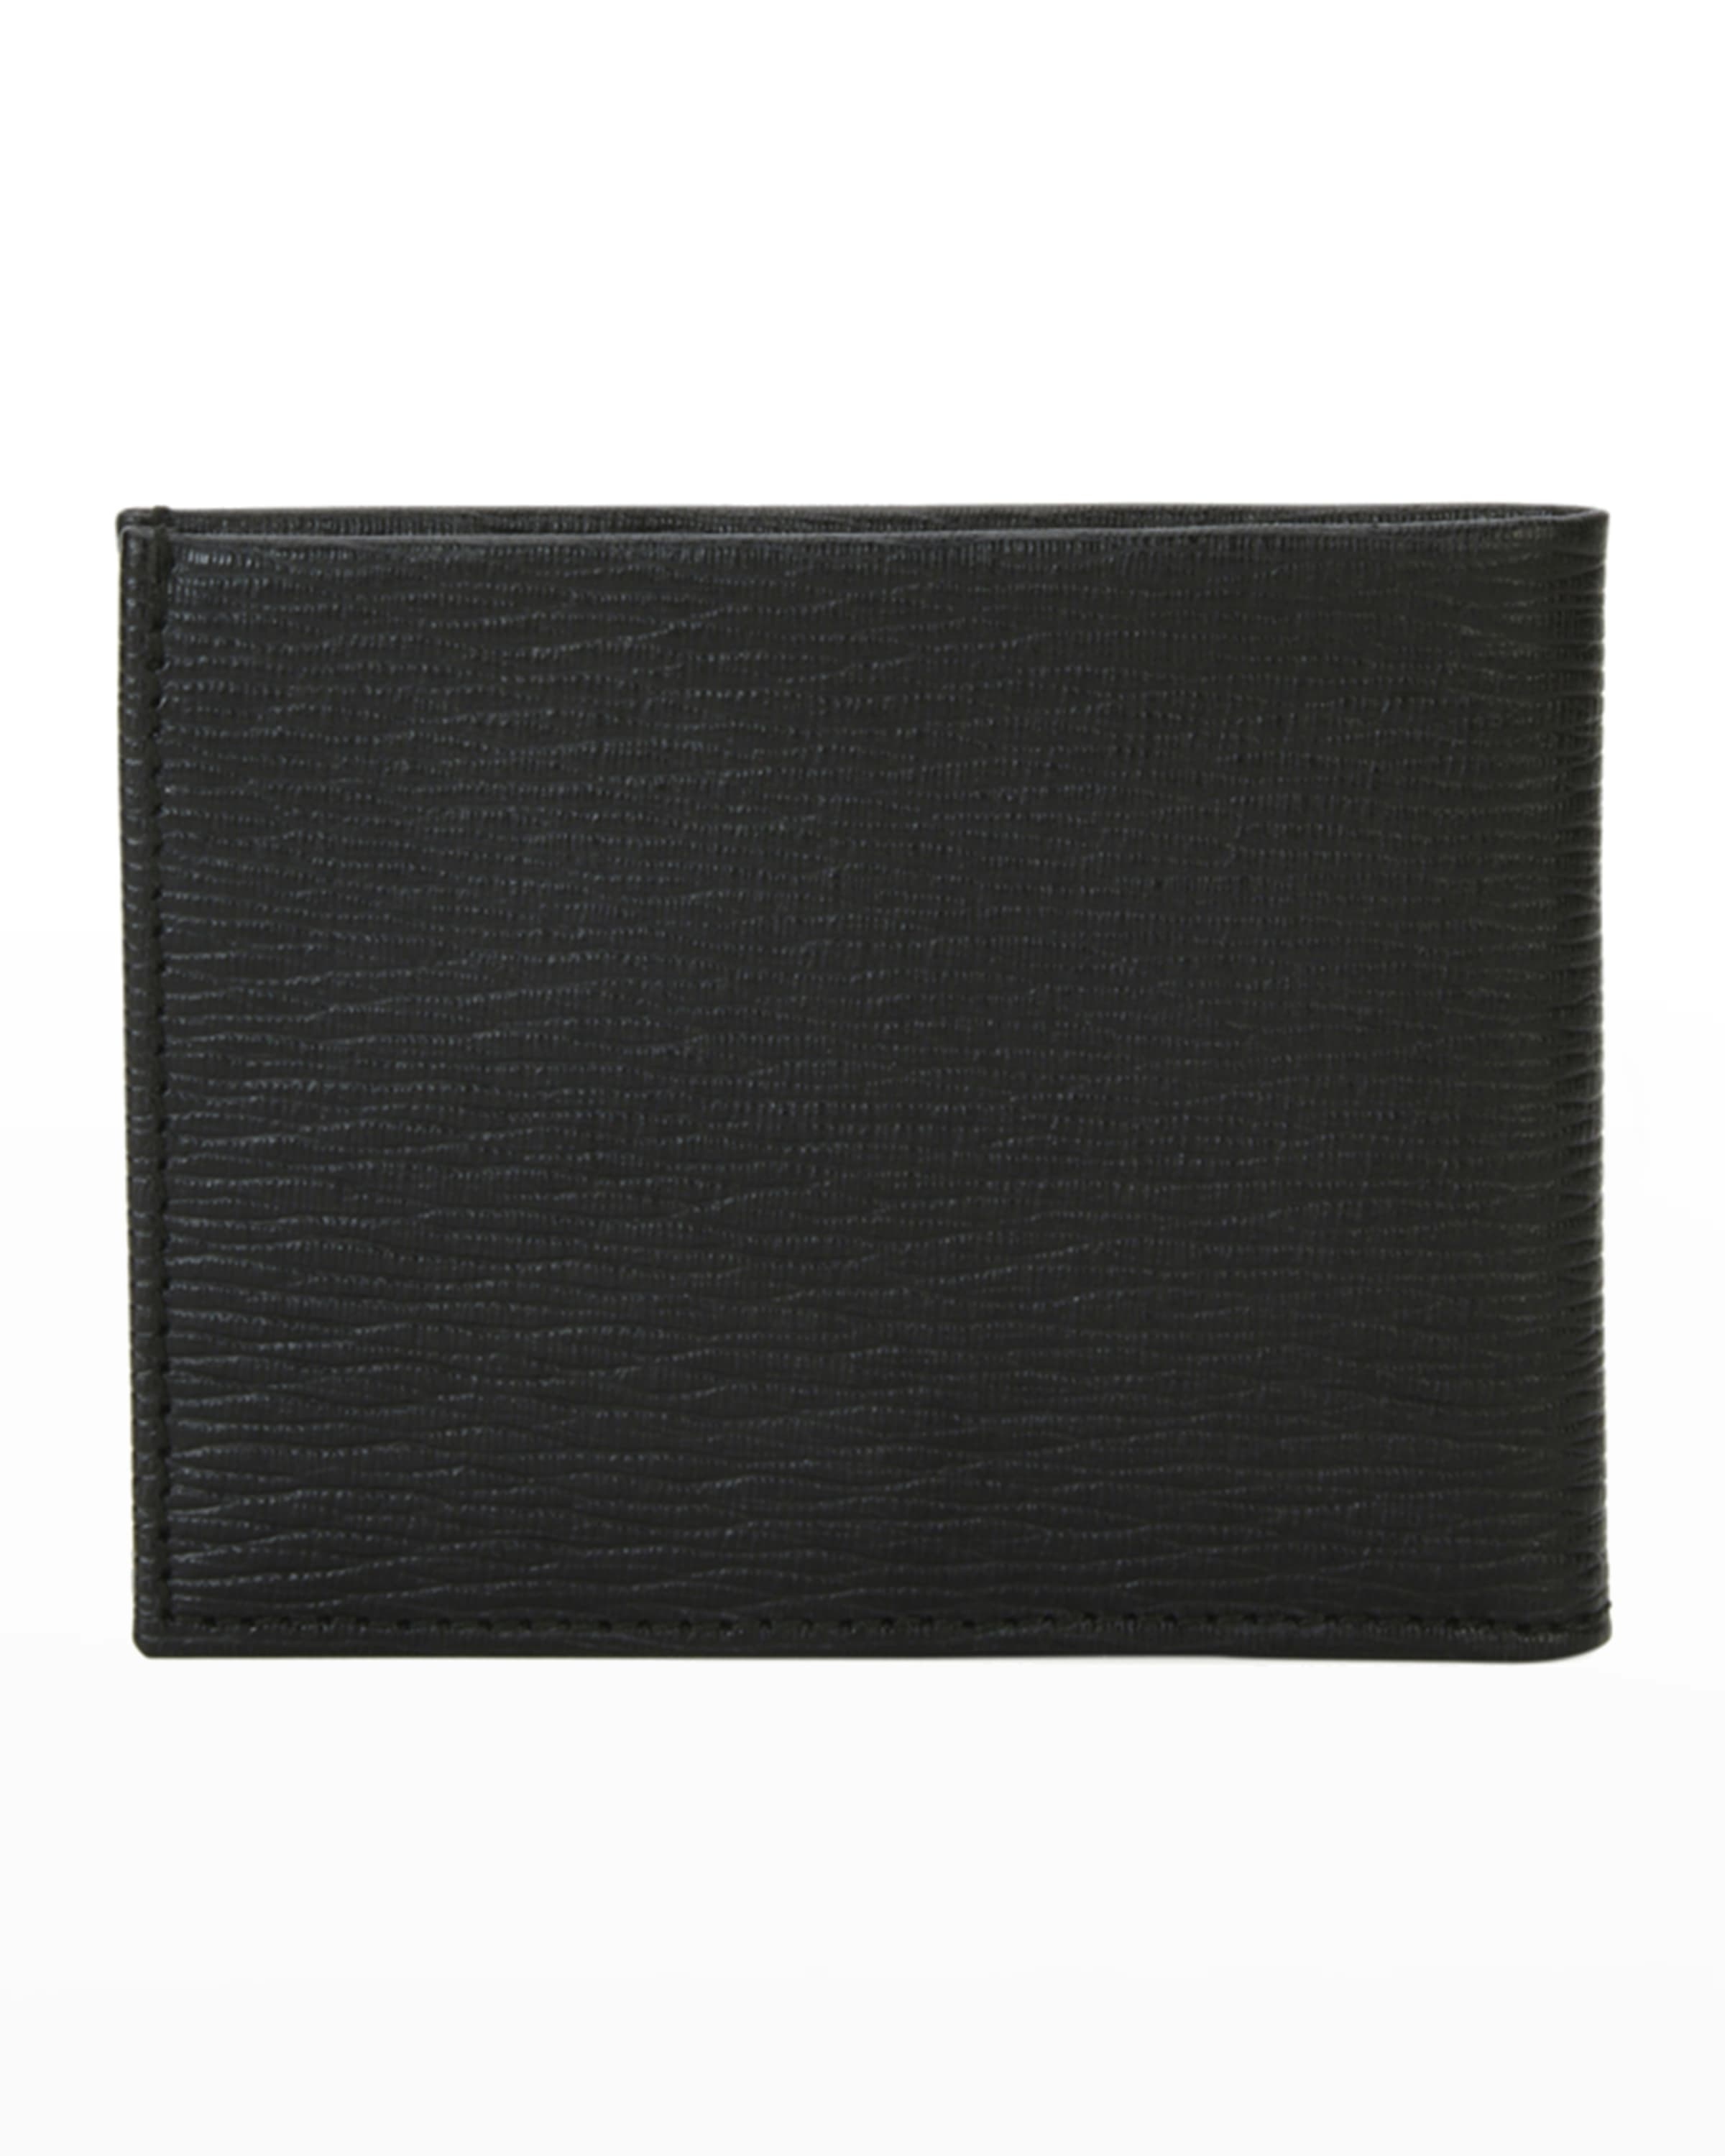 Men's Revival Gancini Bi-Fold Leather Wallet with Window, Black - 3